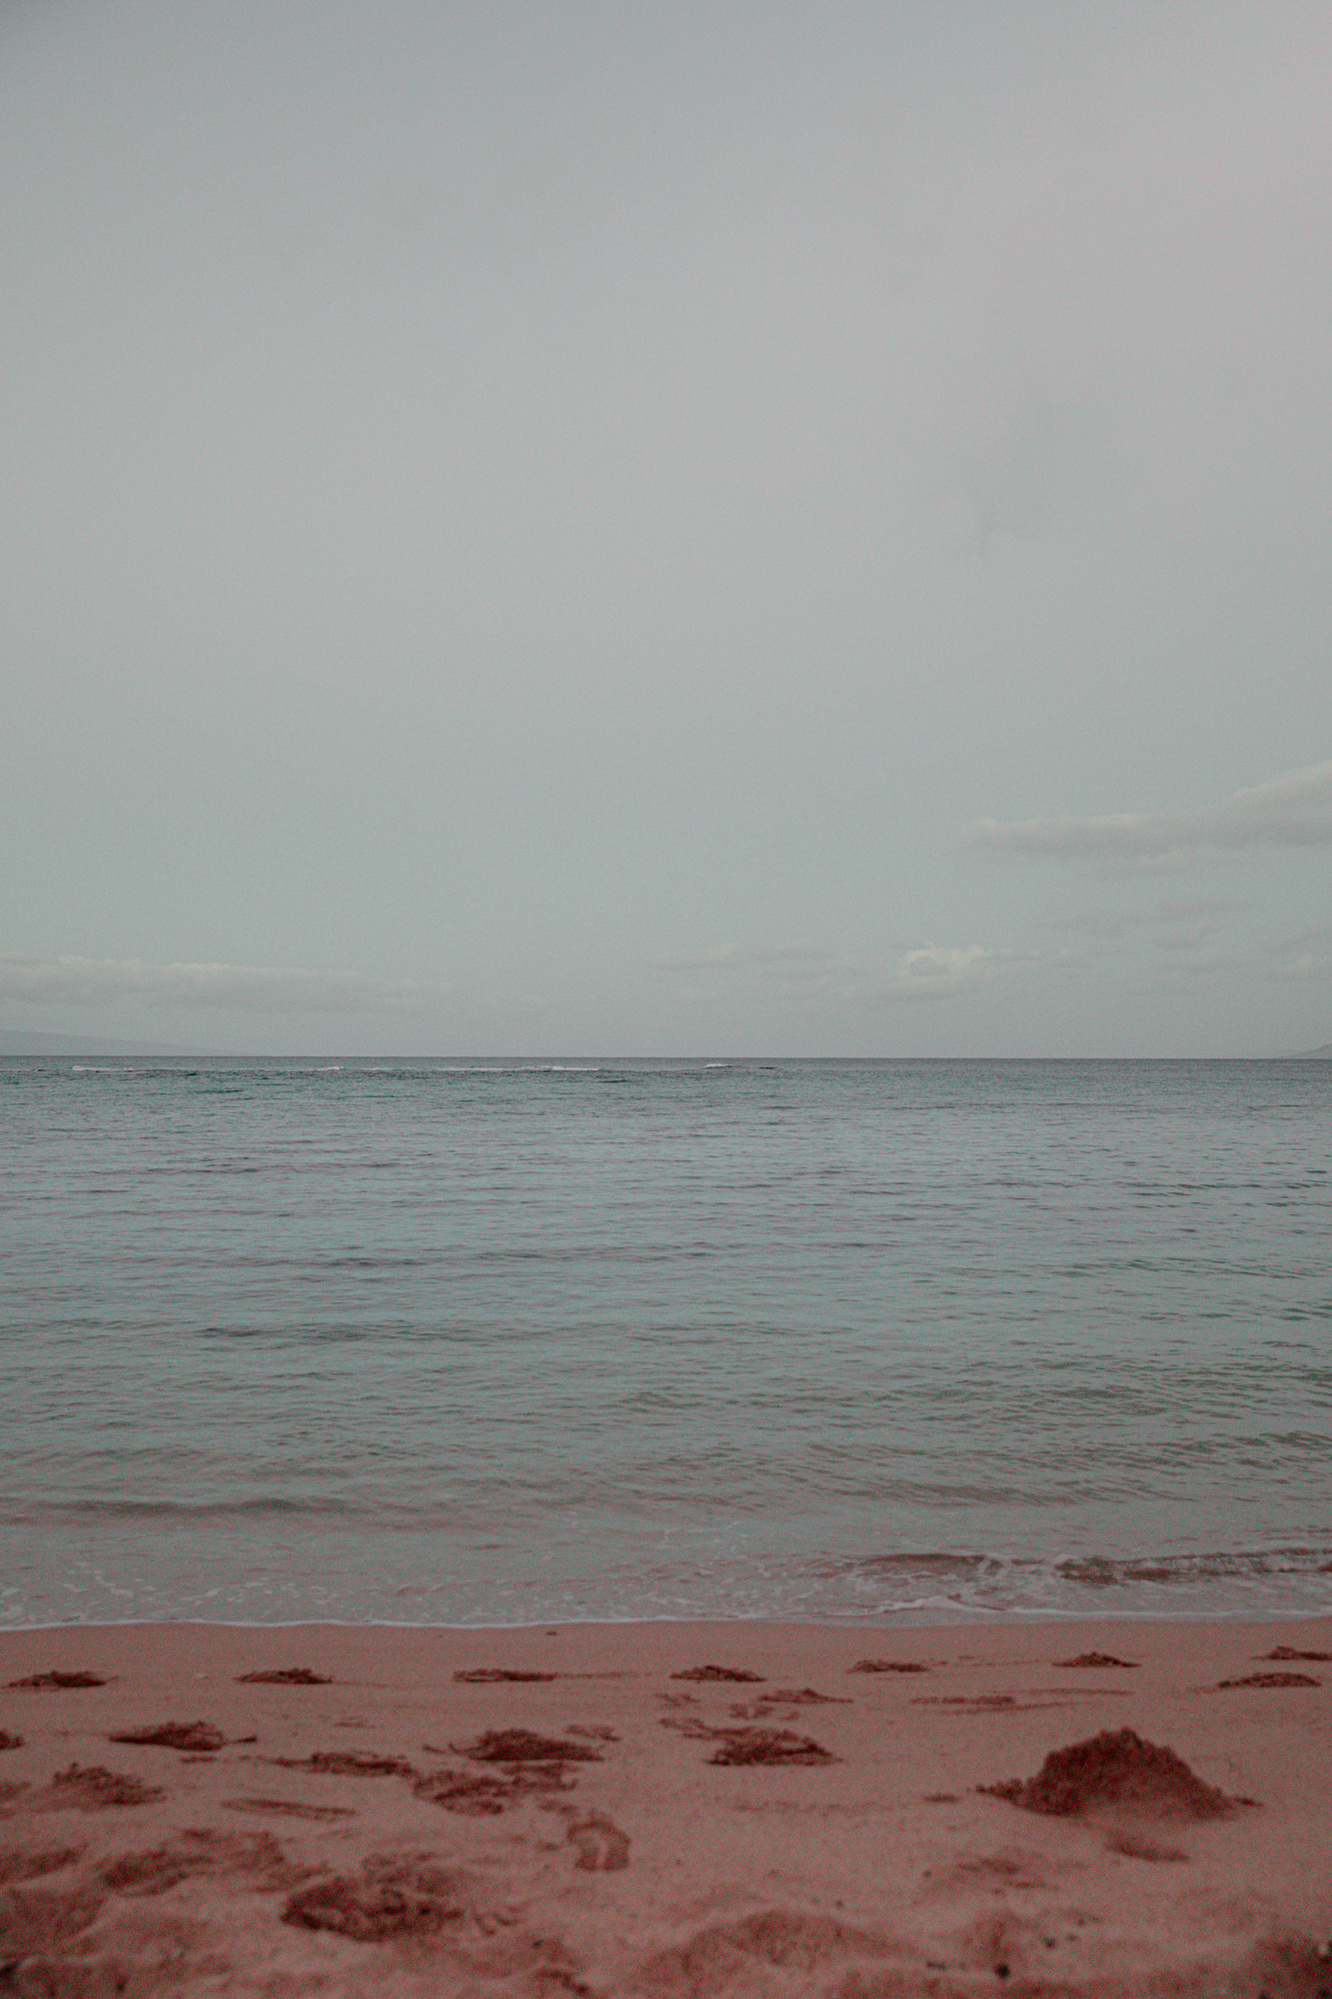 Ocean view from Kapalua Bay